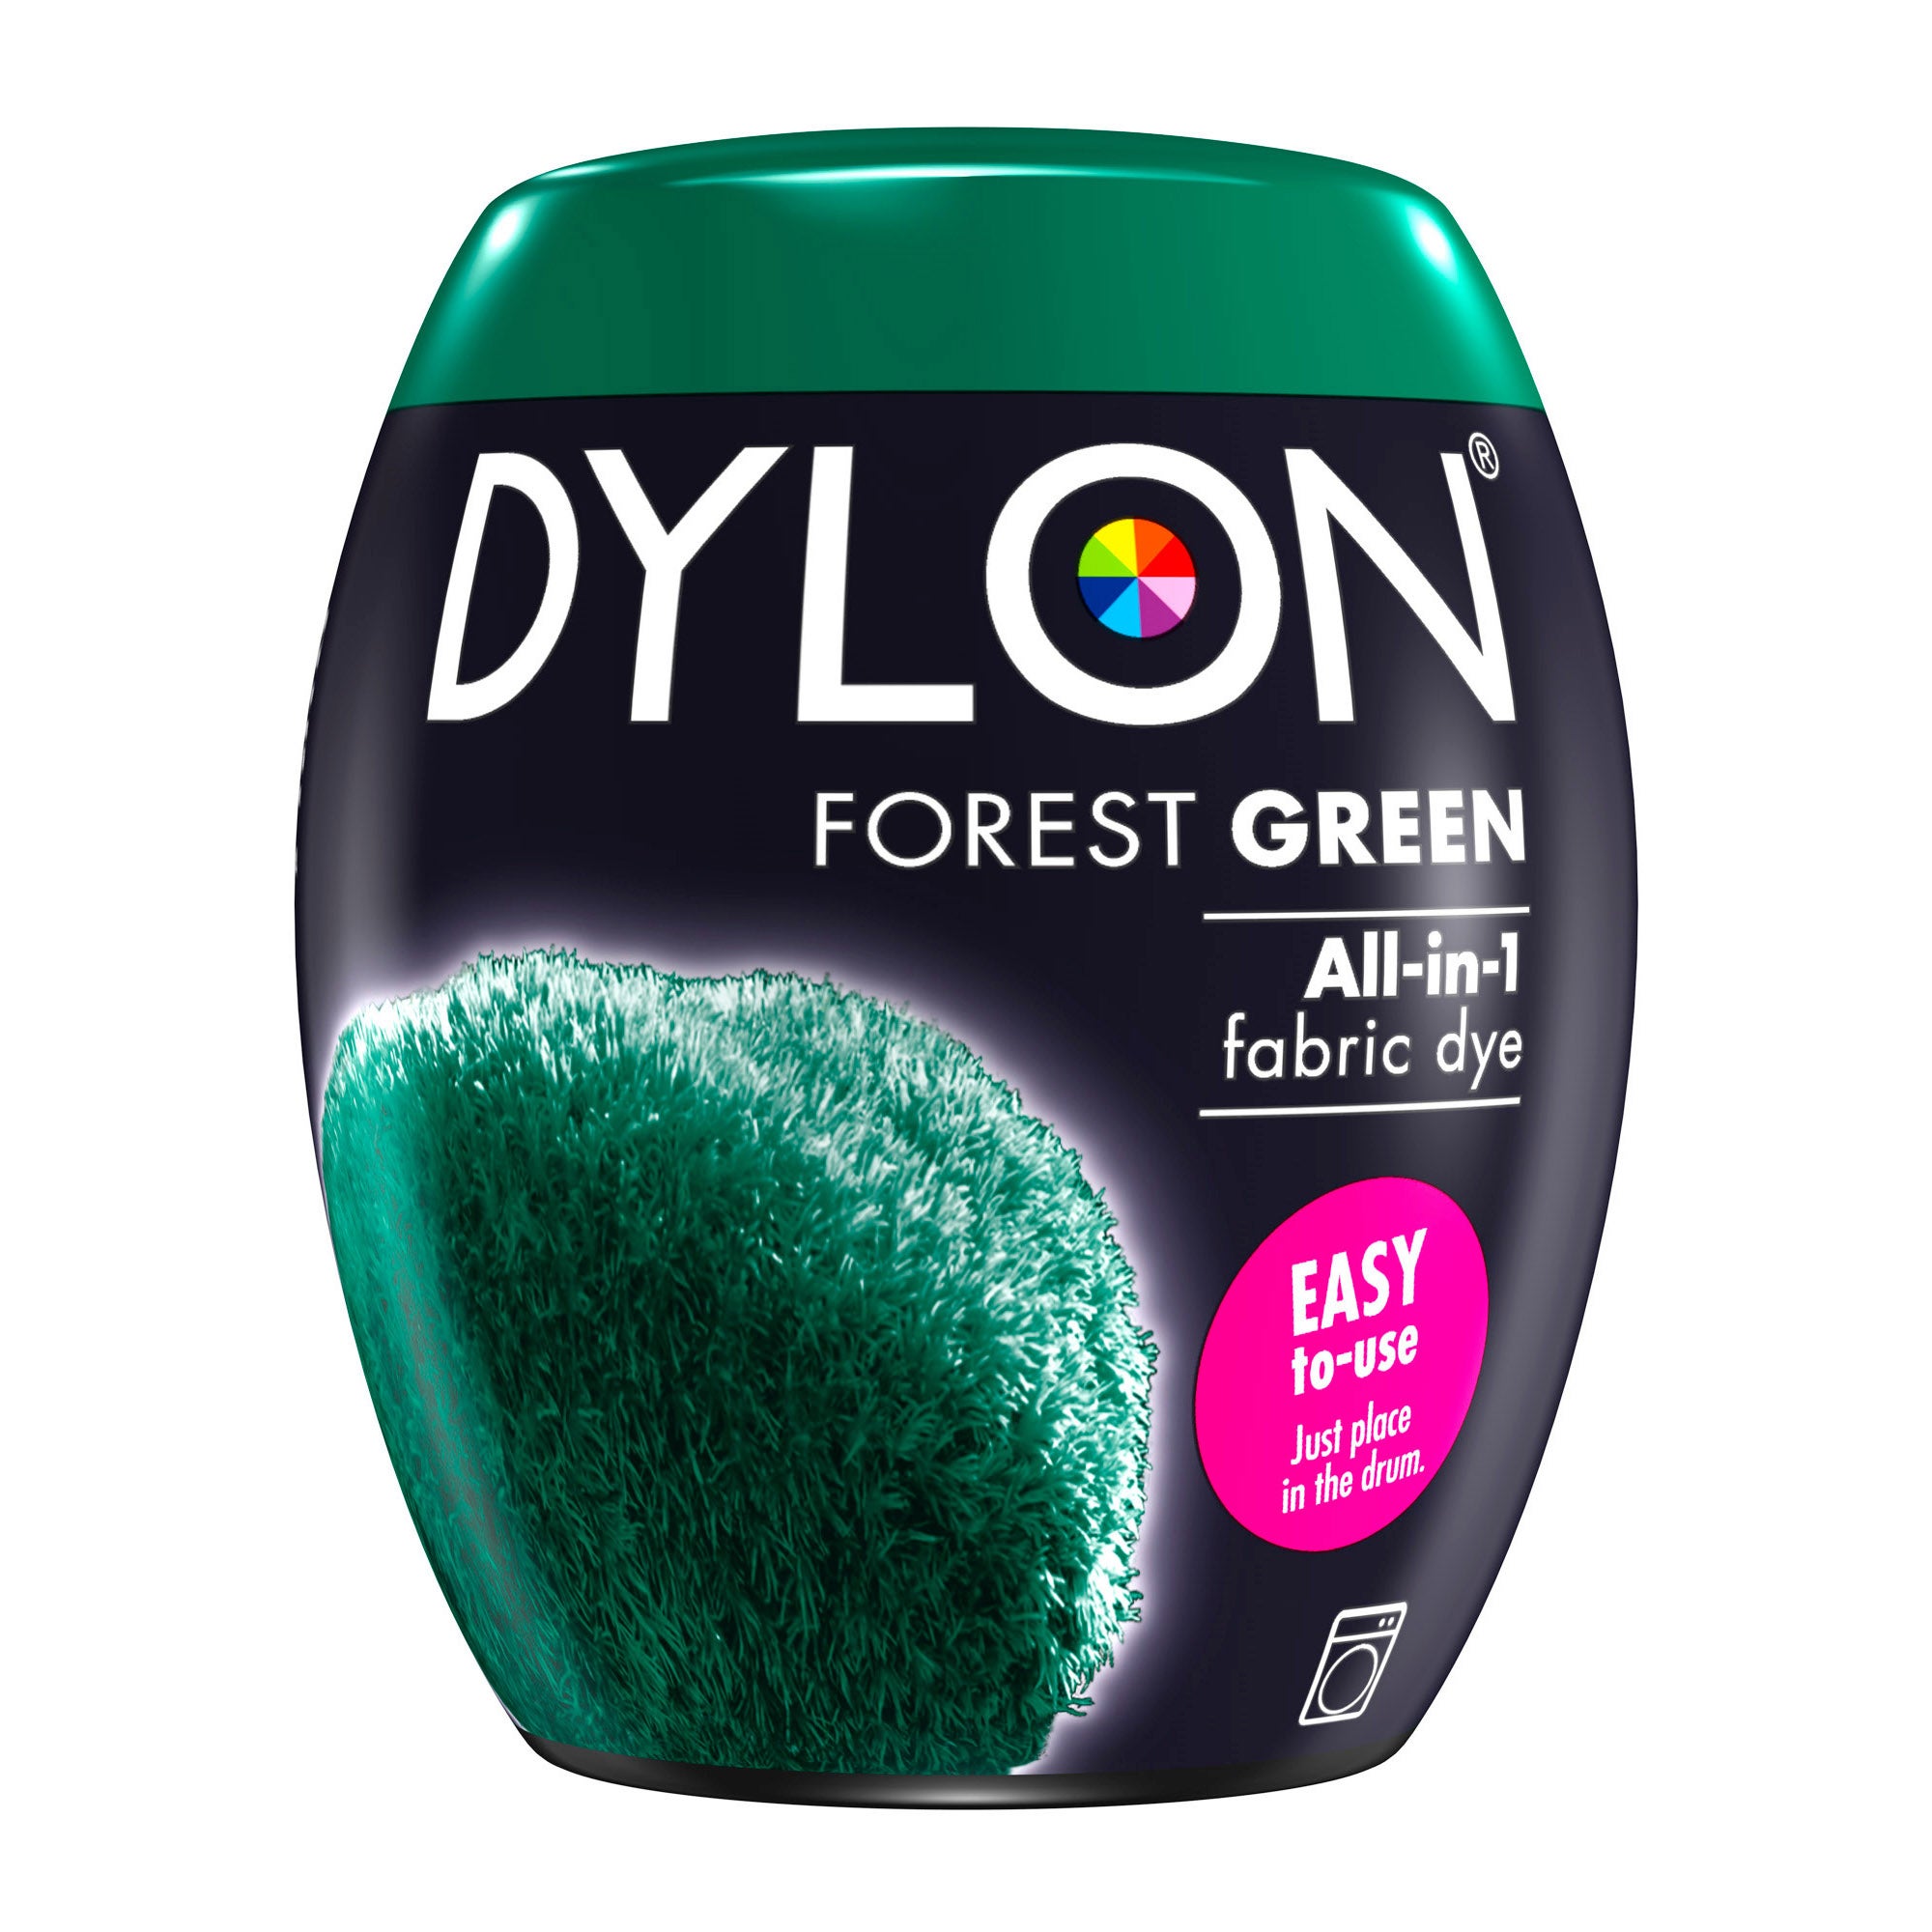 Dylon dye forest green